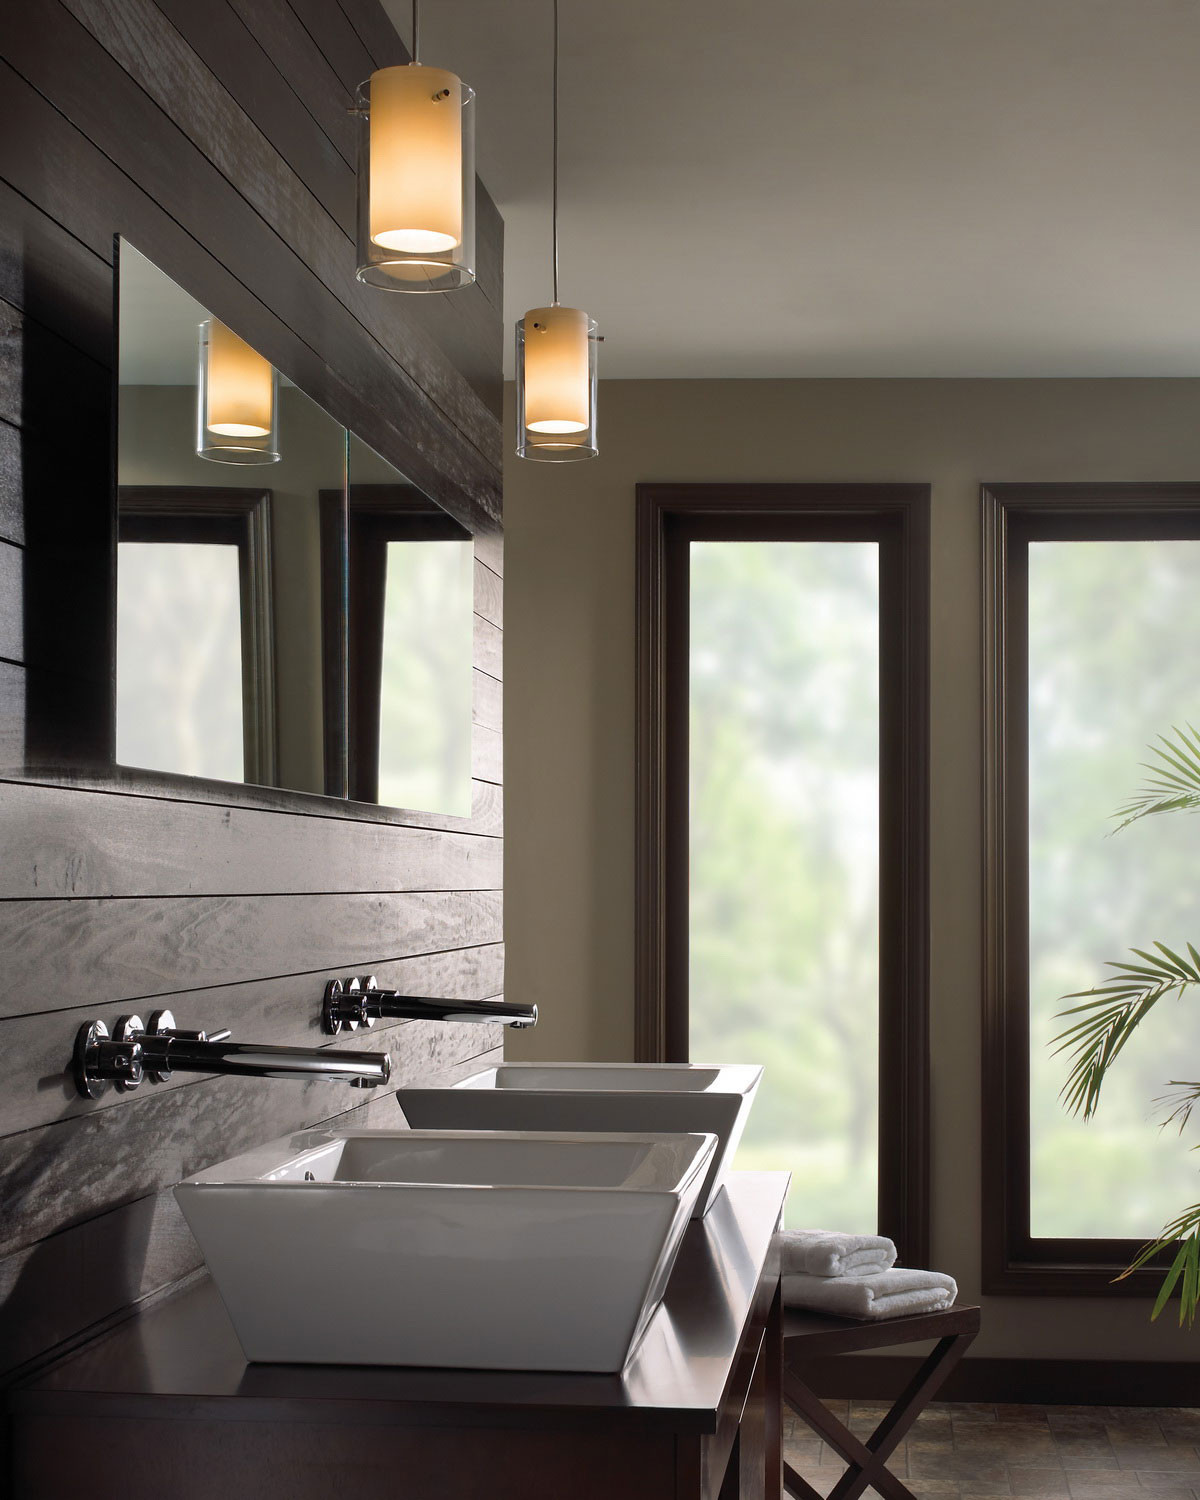 Bathroom Vanity Lighting Design
 Bathroom Pendant Lighting and How to Incorporate It into